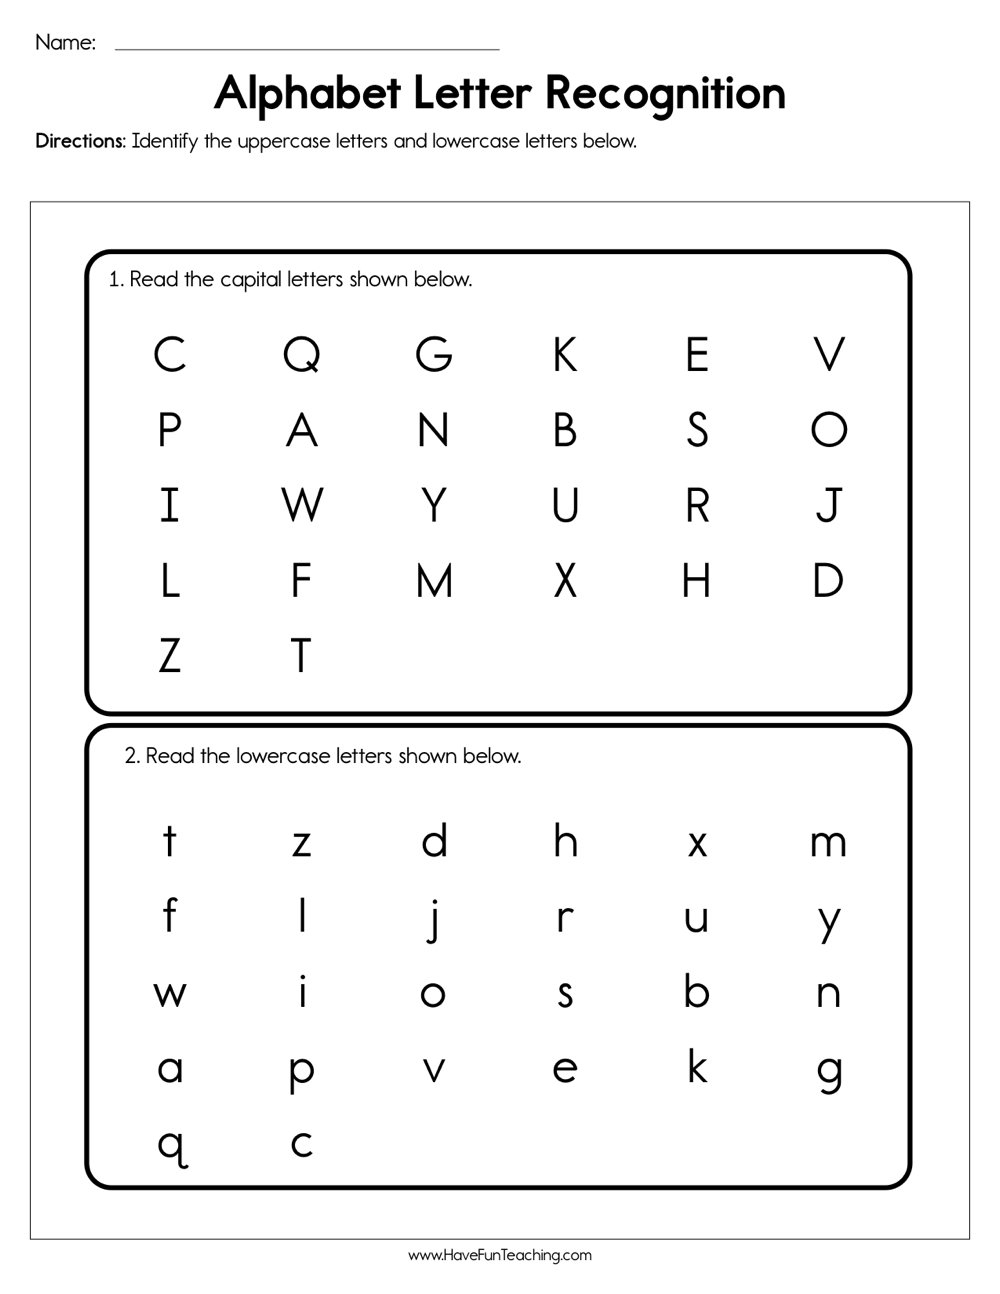 Alphabet Letter Recognition Assessment | Have Fun Teaching within Alphabet Recognition Worksheets For Kindergarten